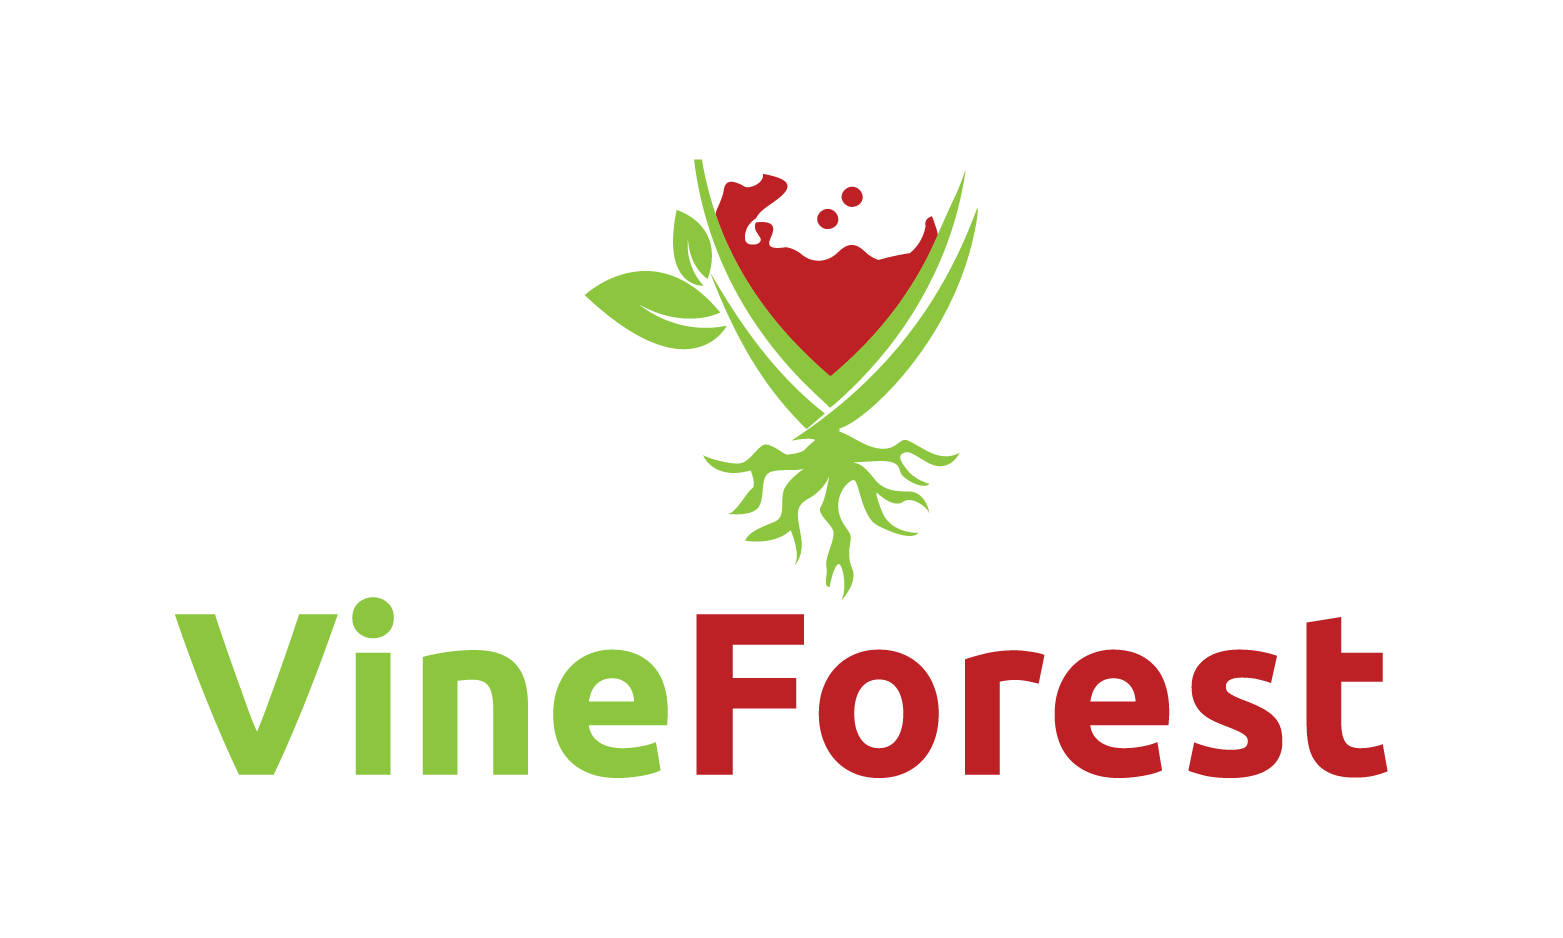 VineForest.com - Creative brandable domain for sale